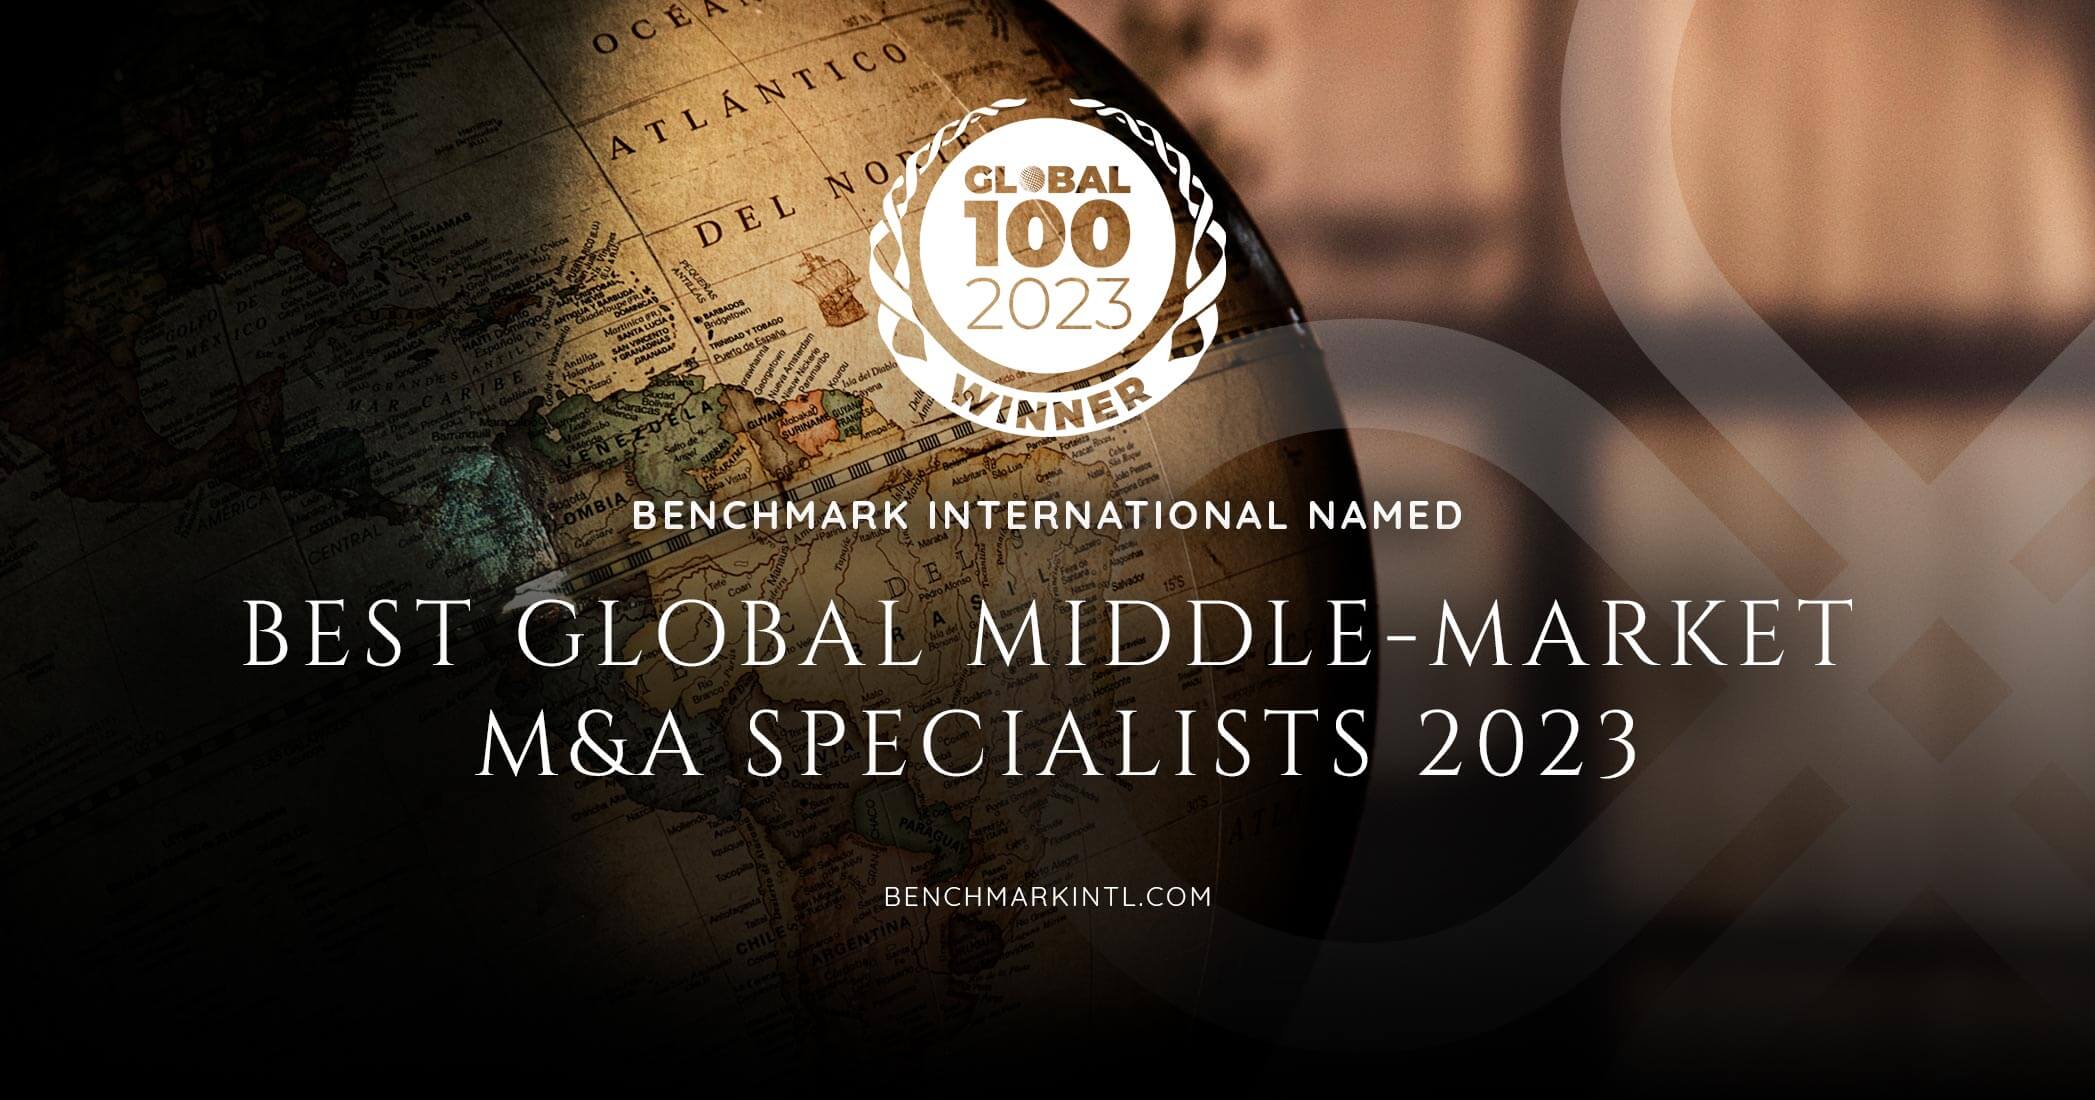 Benchmark International Named Best Global Middle-market M&a Specialists 2023